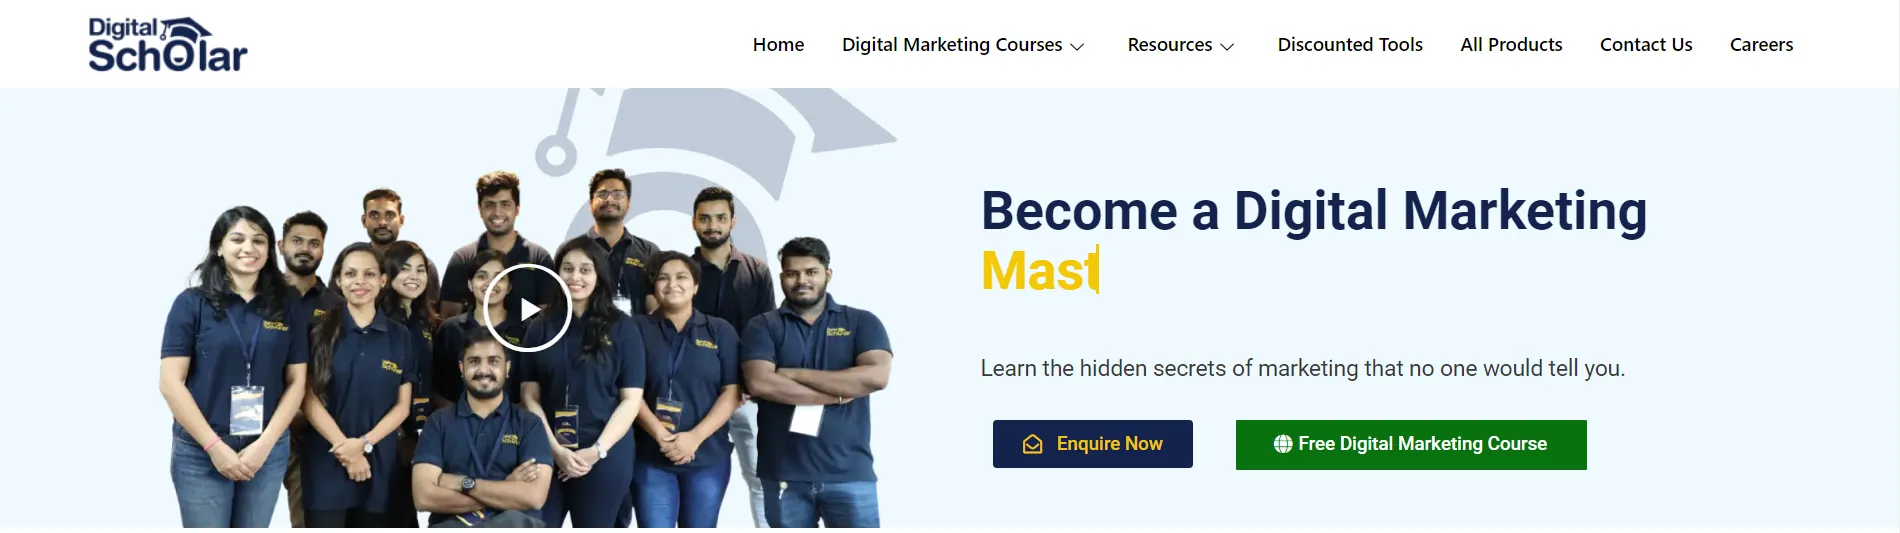 Digital Marketing Training Institute in Chennai